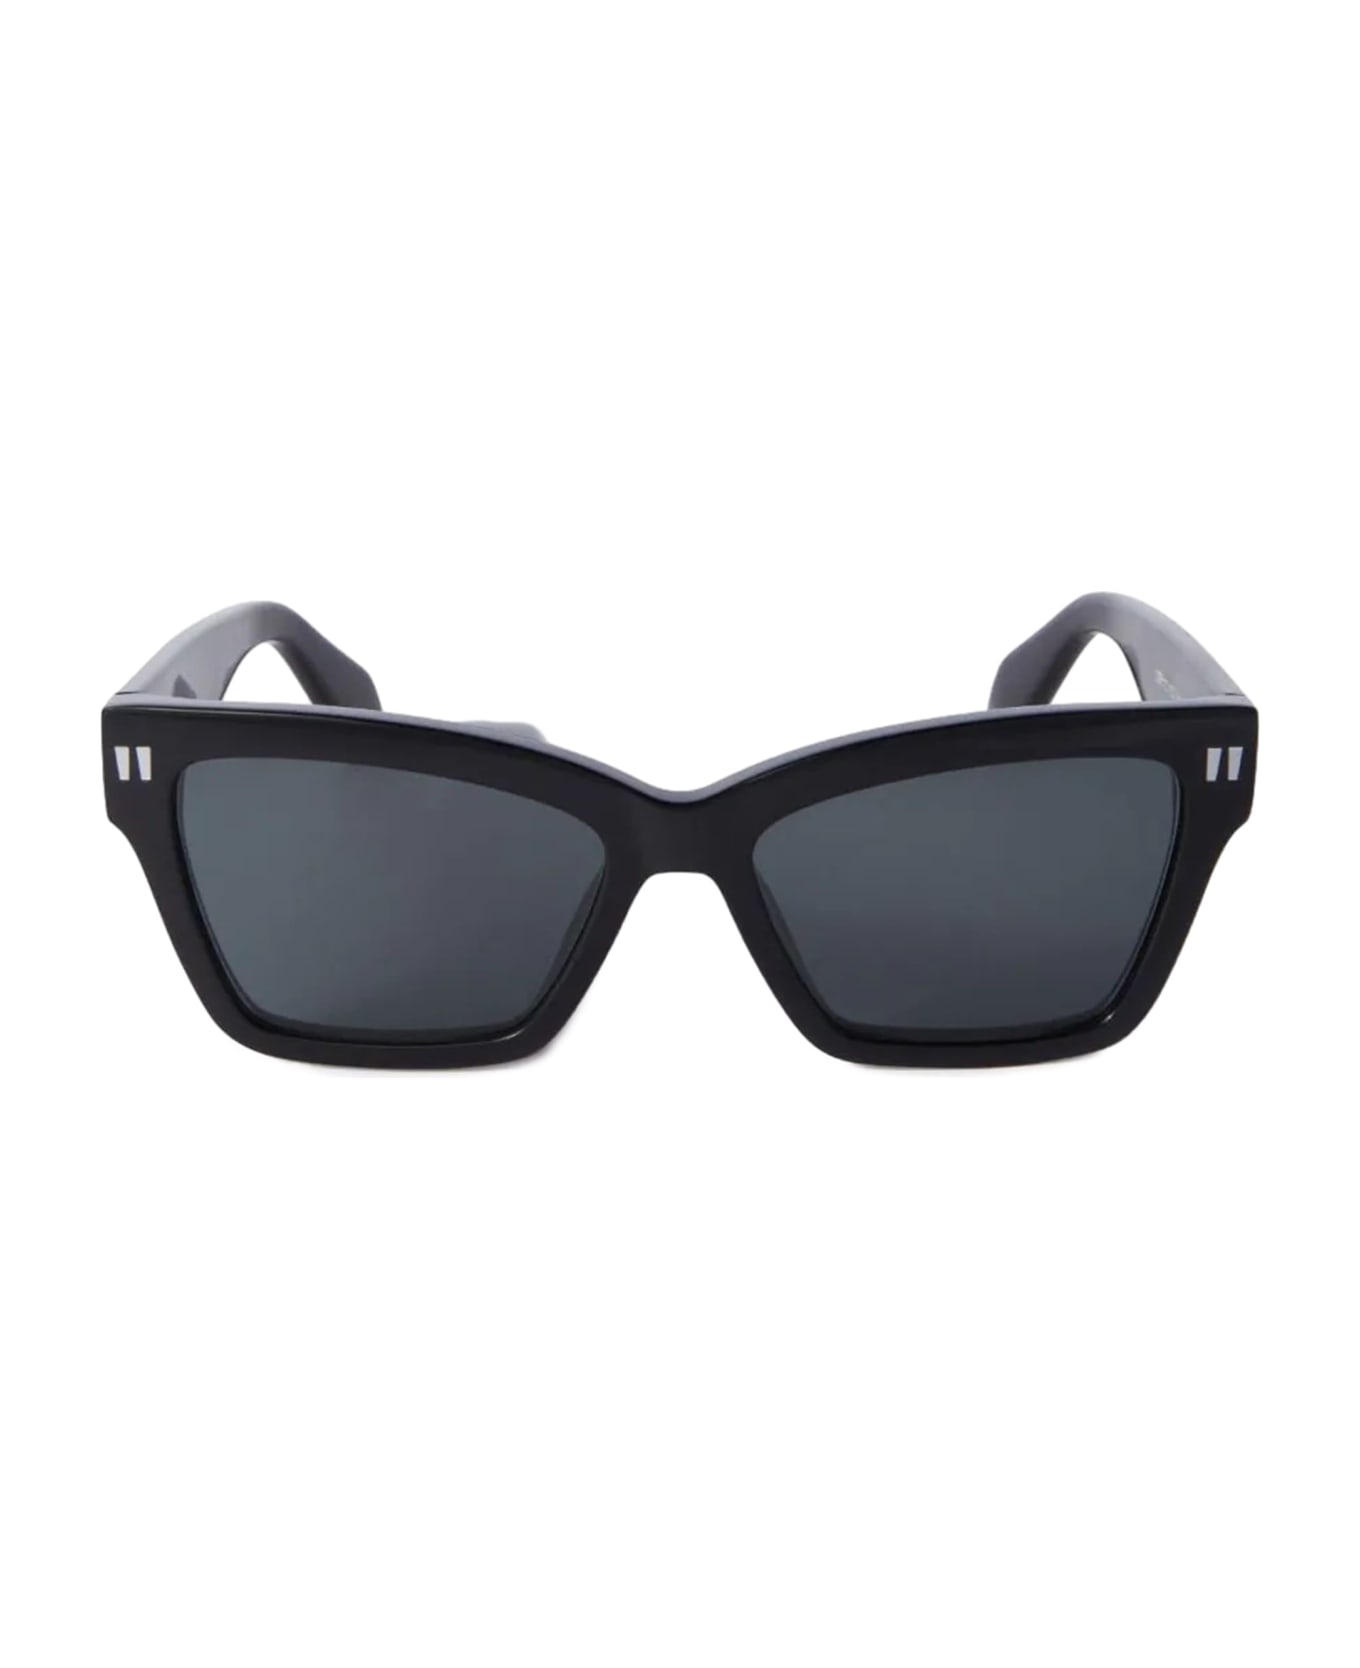 Off-White Cincinnati Sunglasses - Black